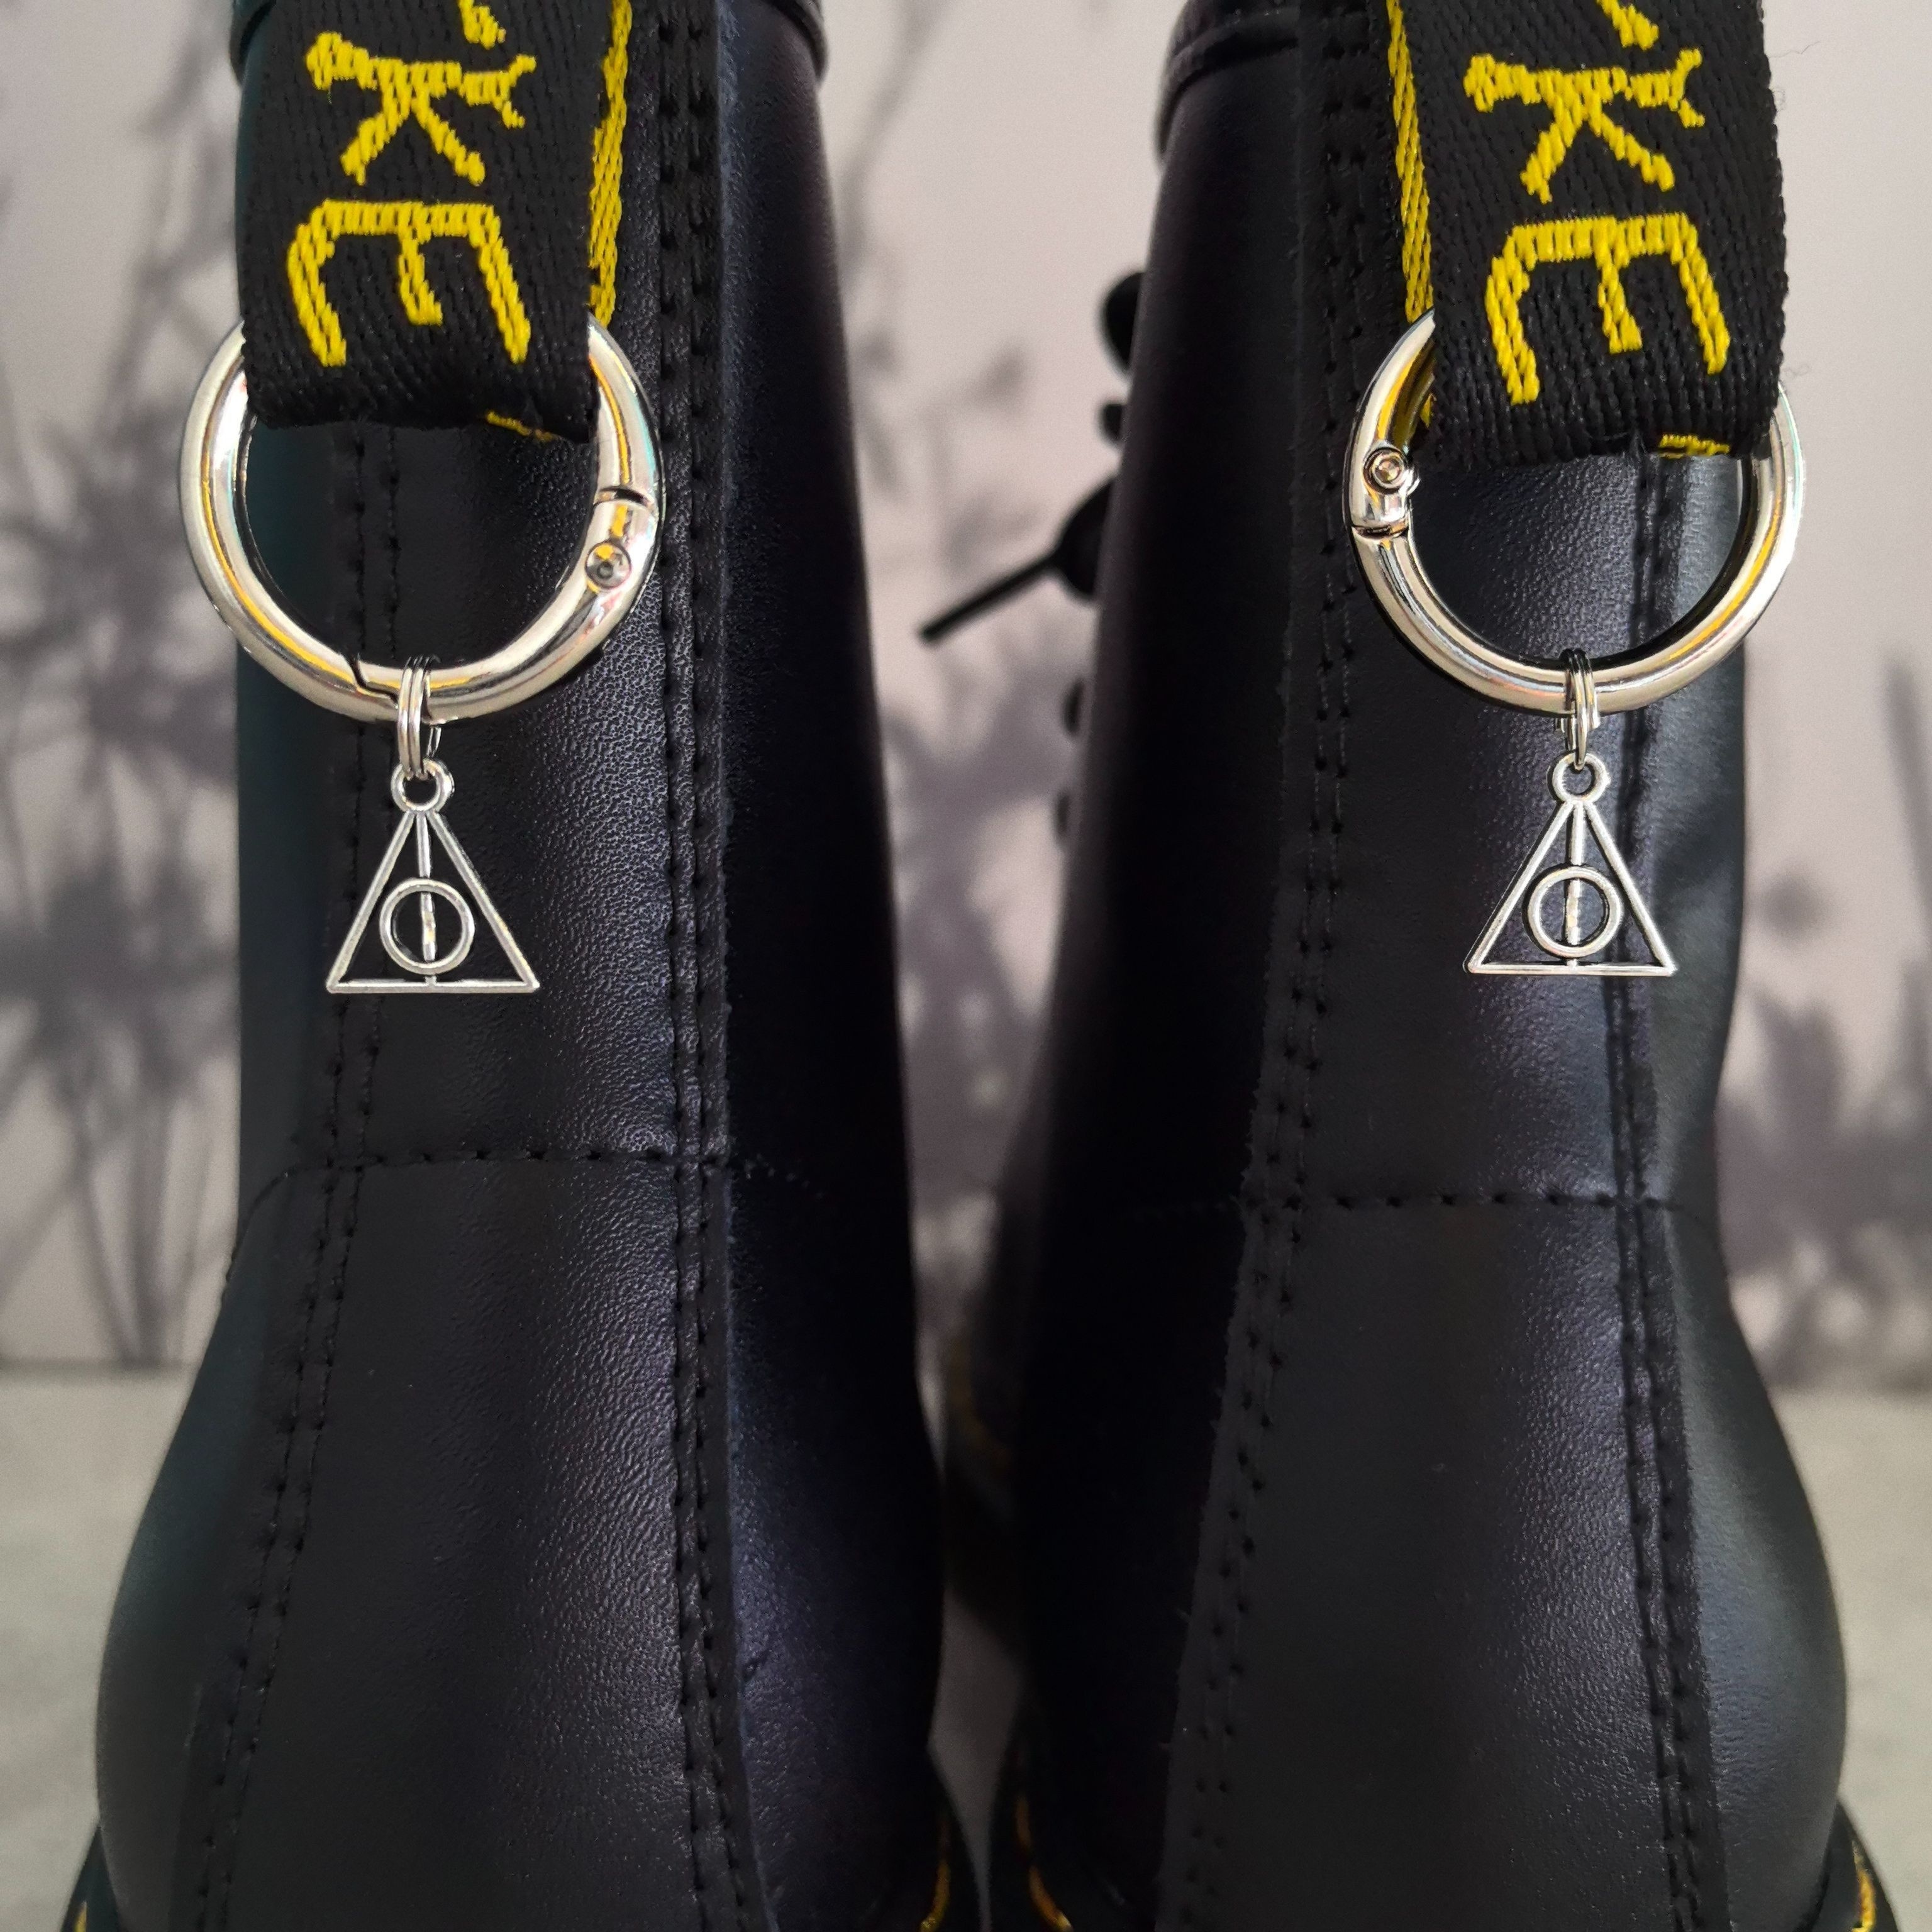 29 Pcs Harry Potter Themed Shoes Charms For Crocs Clog Sandals